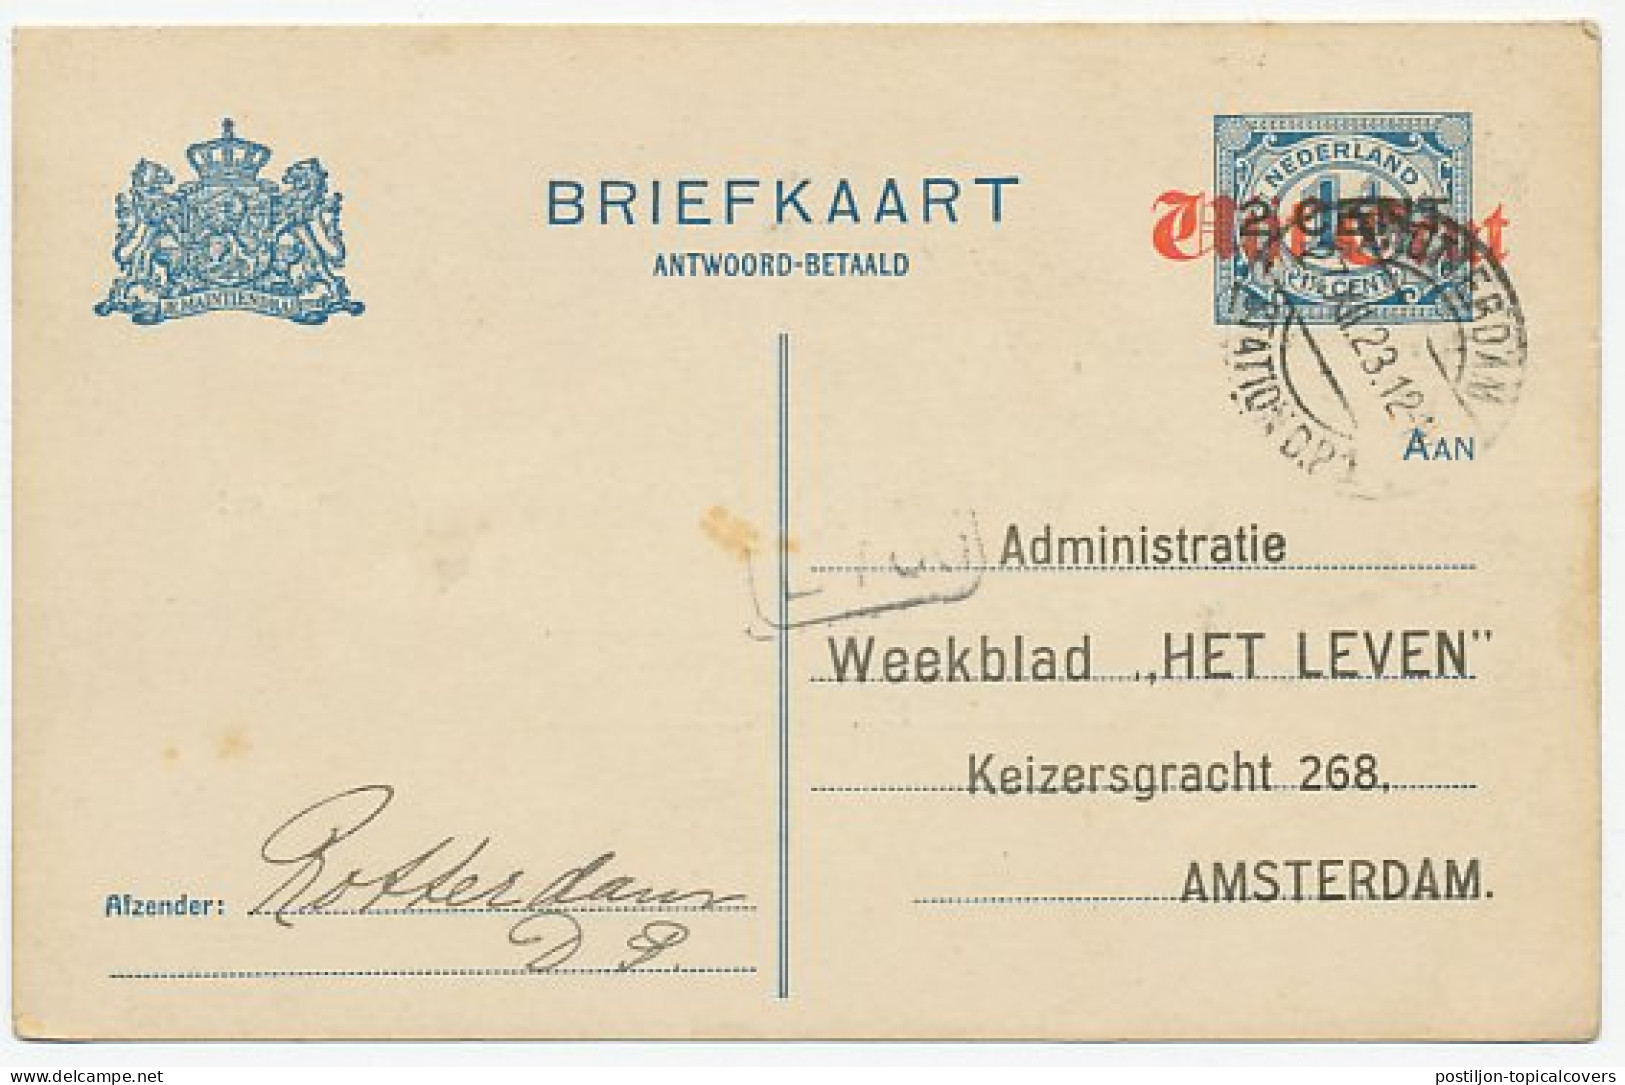 Briefkaart G. 118 Particulier Bedrukt Rotterdam 1923 - Postwaardestukken